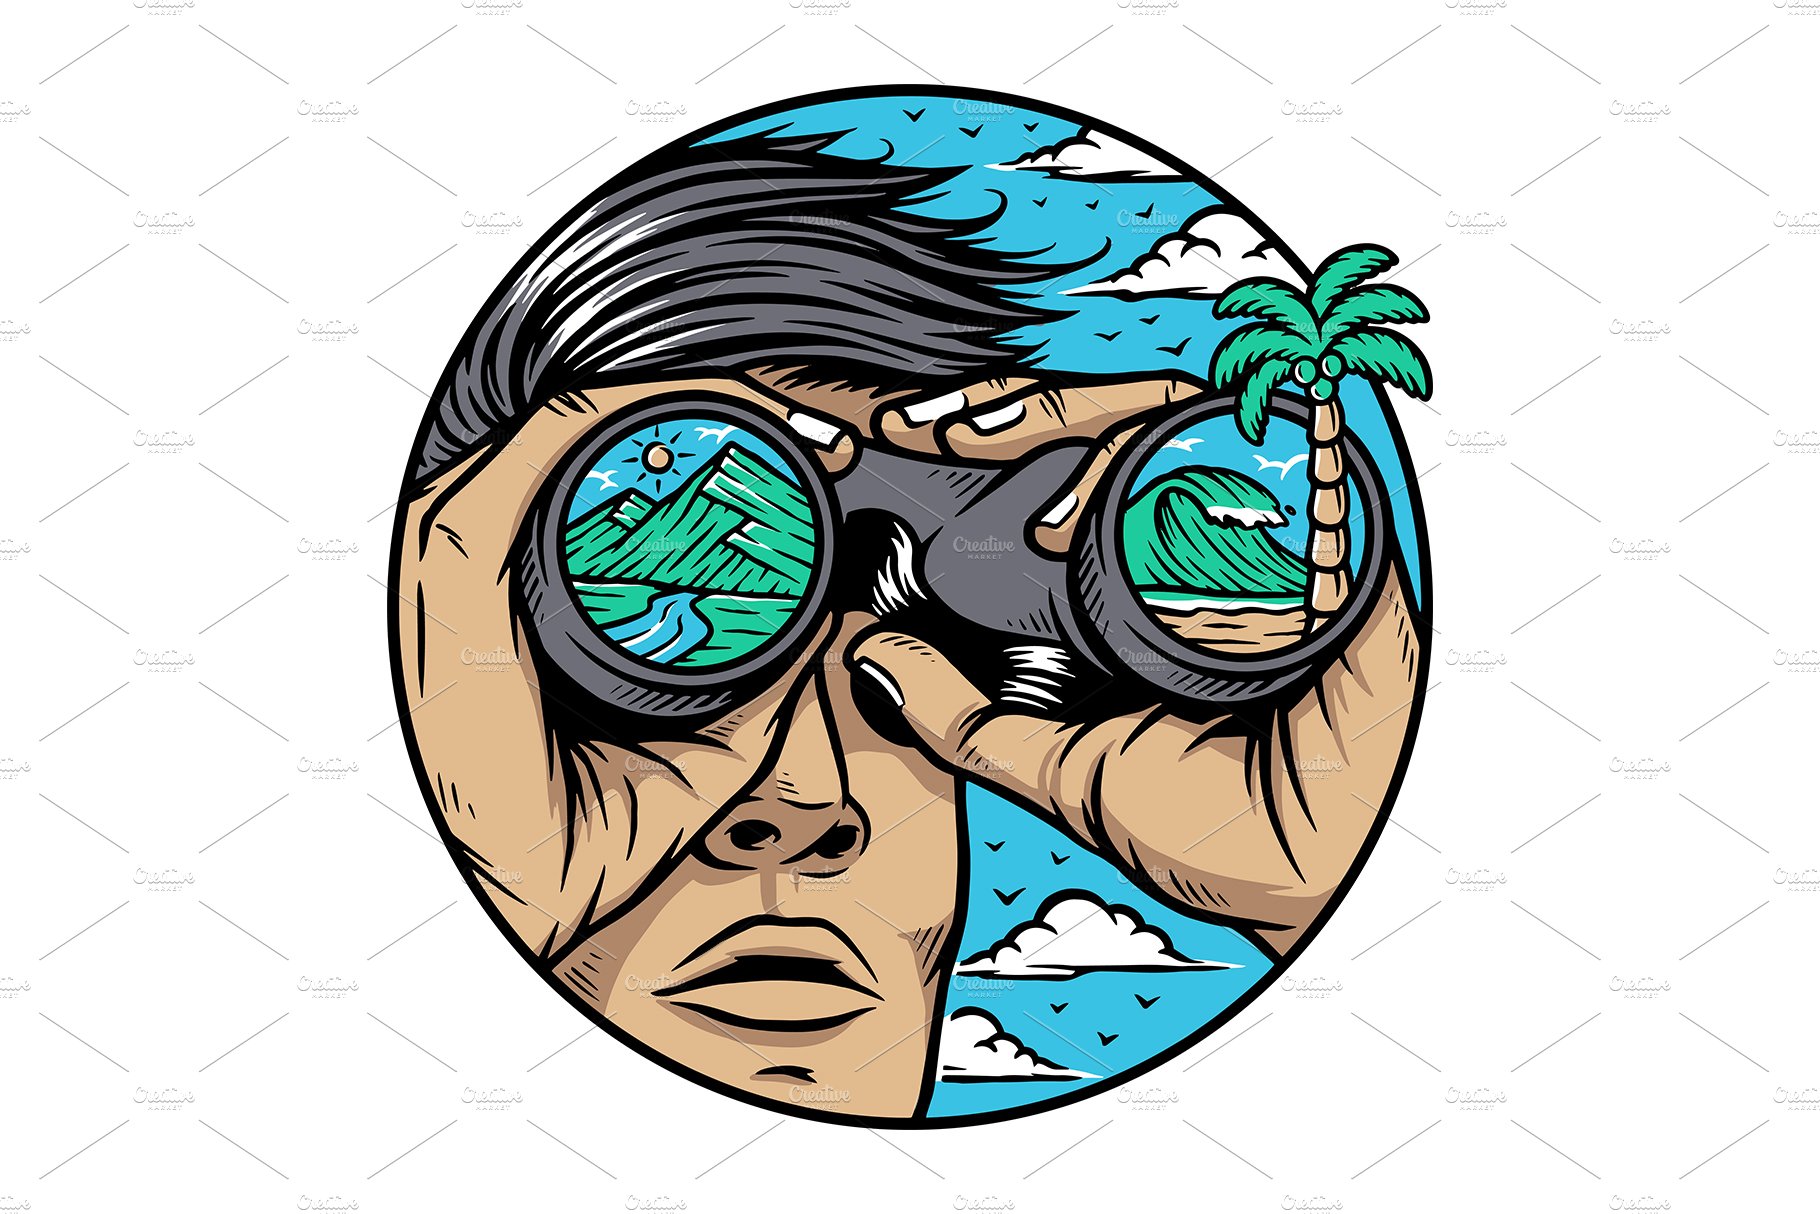 People see nature through binoculars cover image.